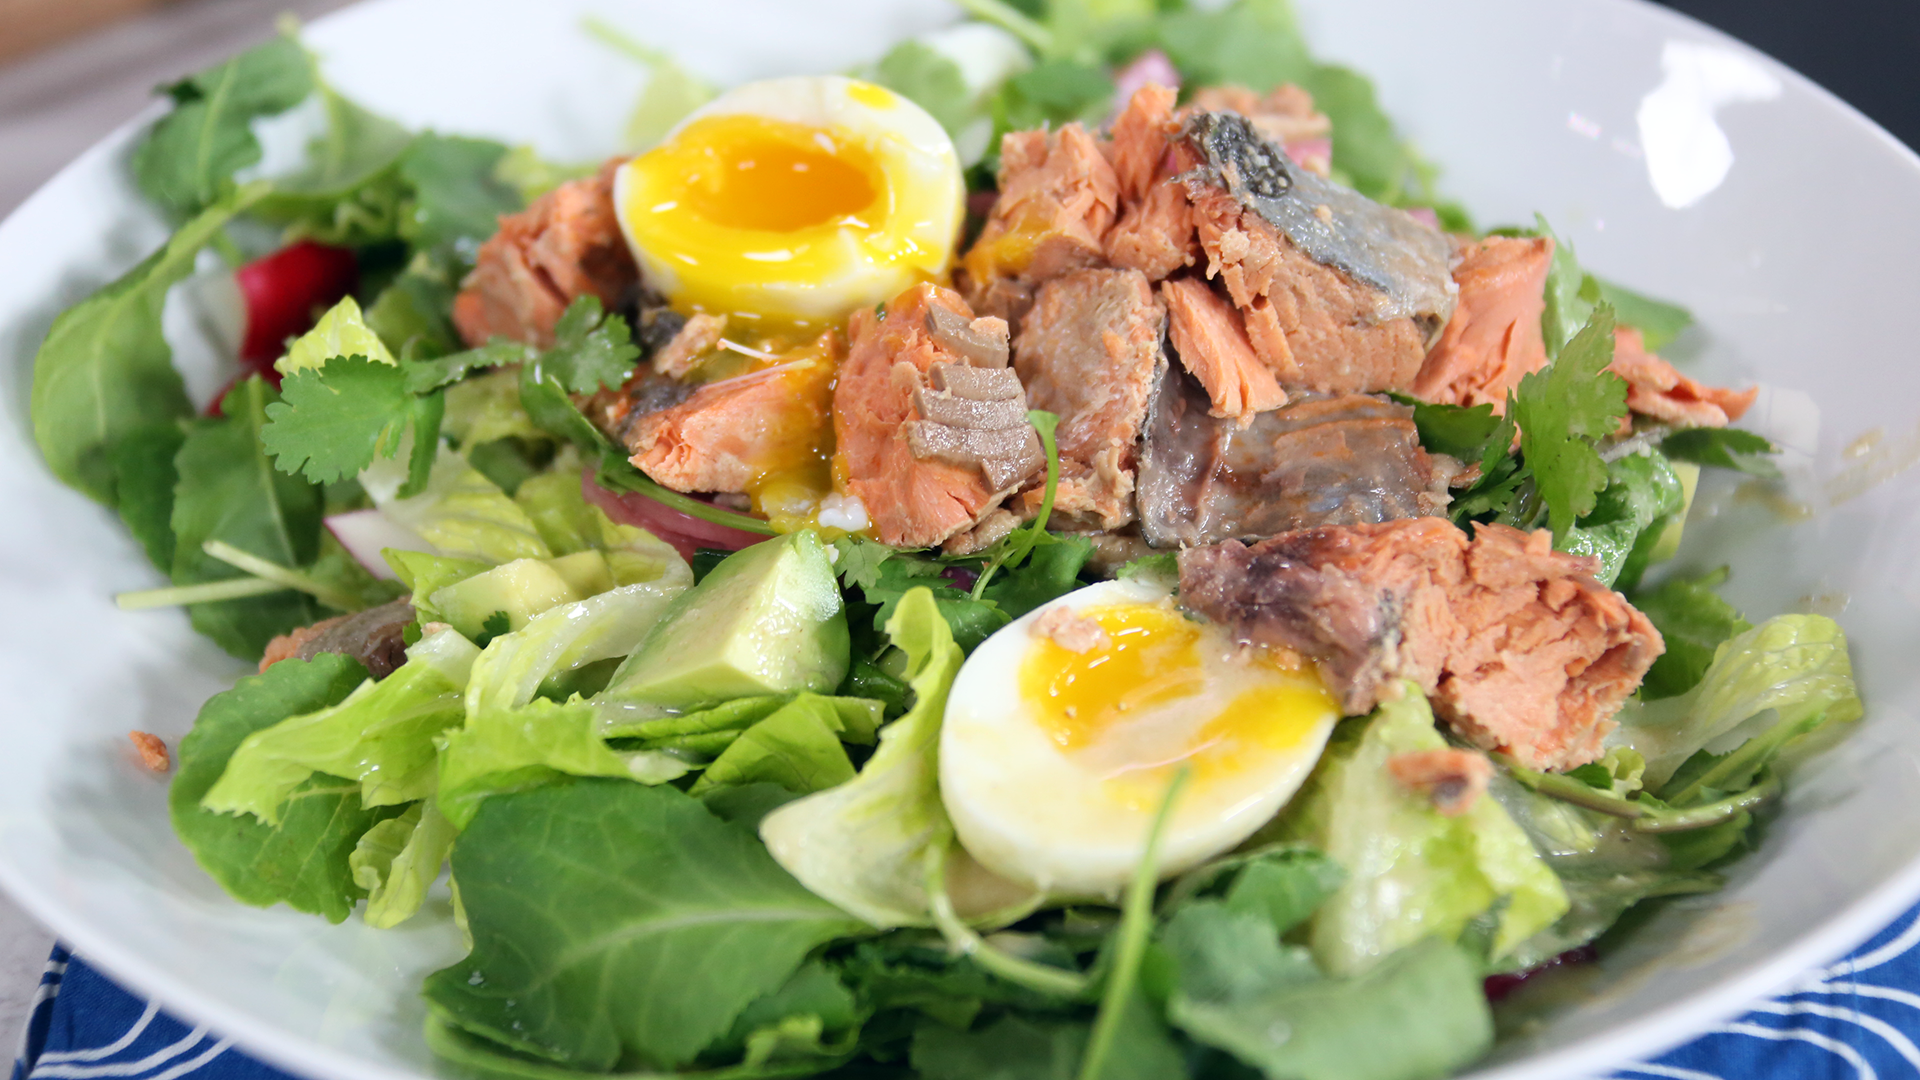 Rodney's protein-rich post-workout salad